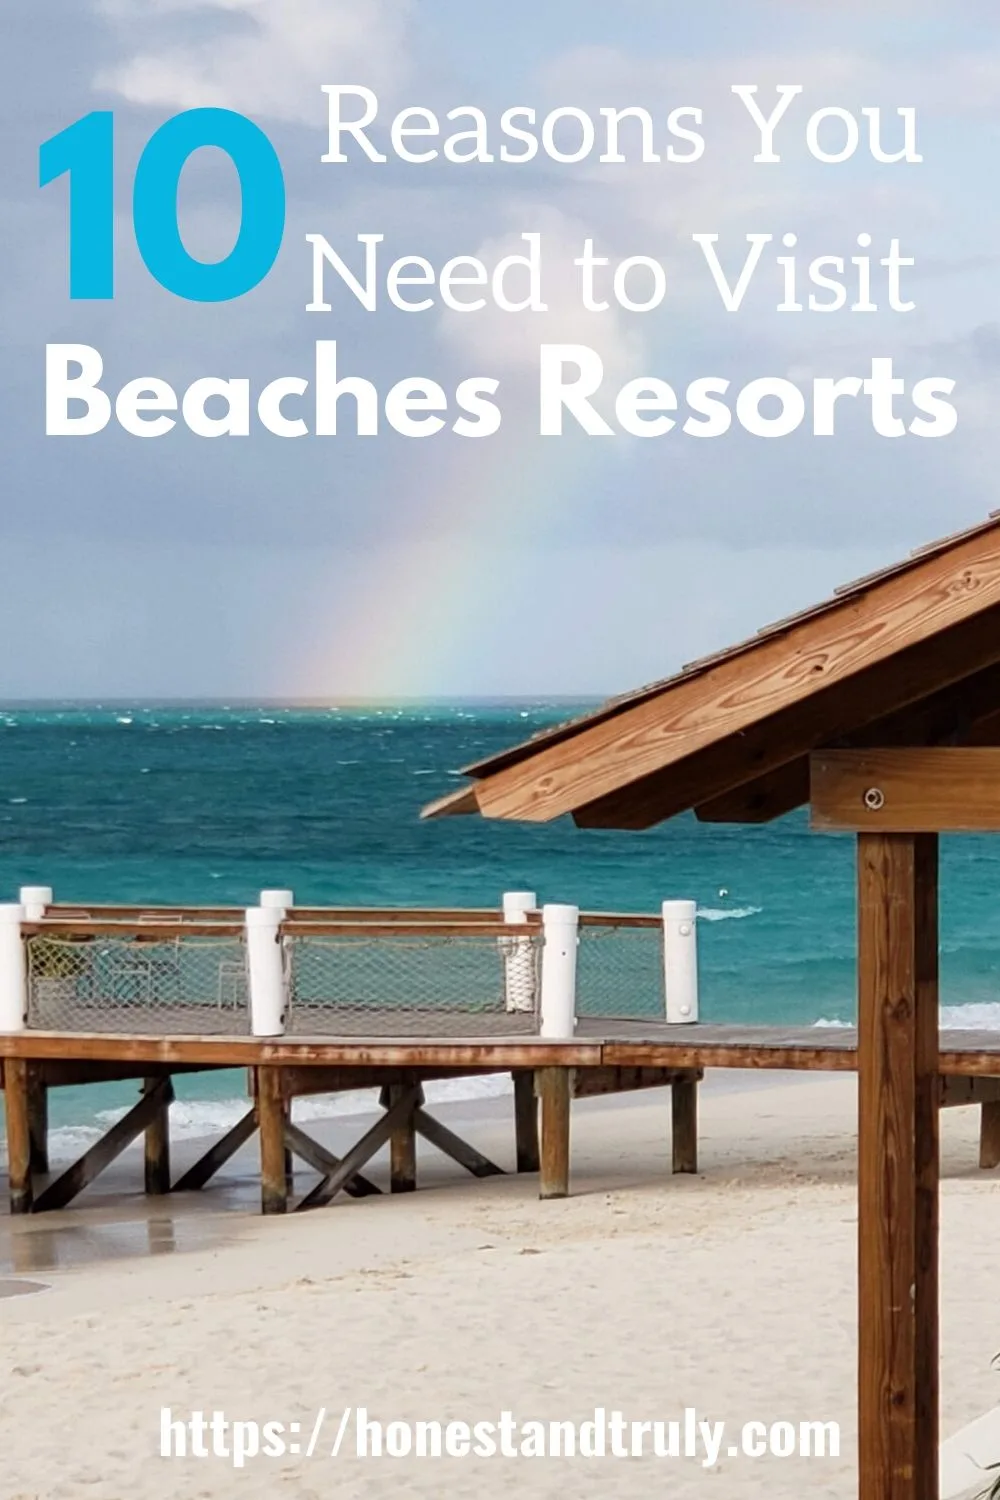 Best Beaches Resort? - Top 5 Ranked & Reviewed